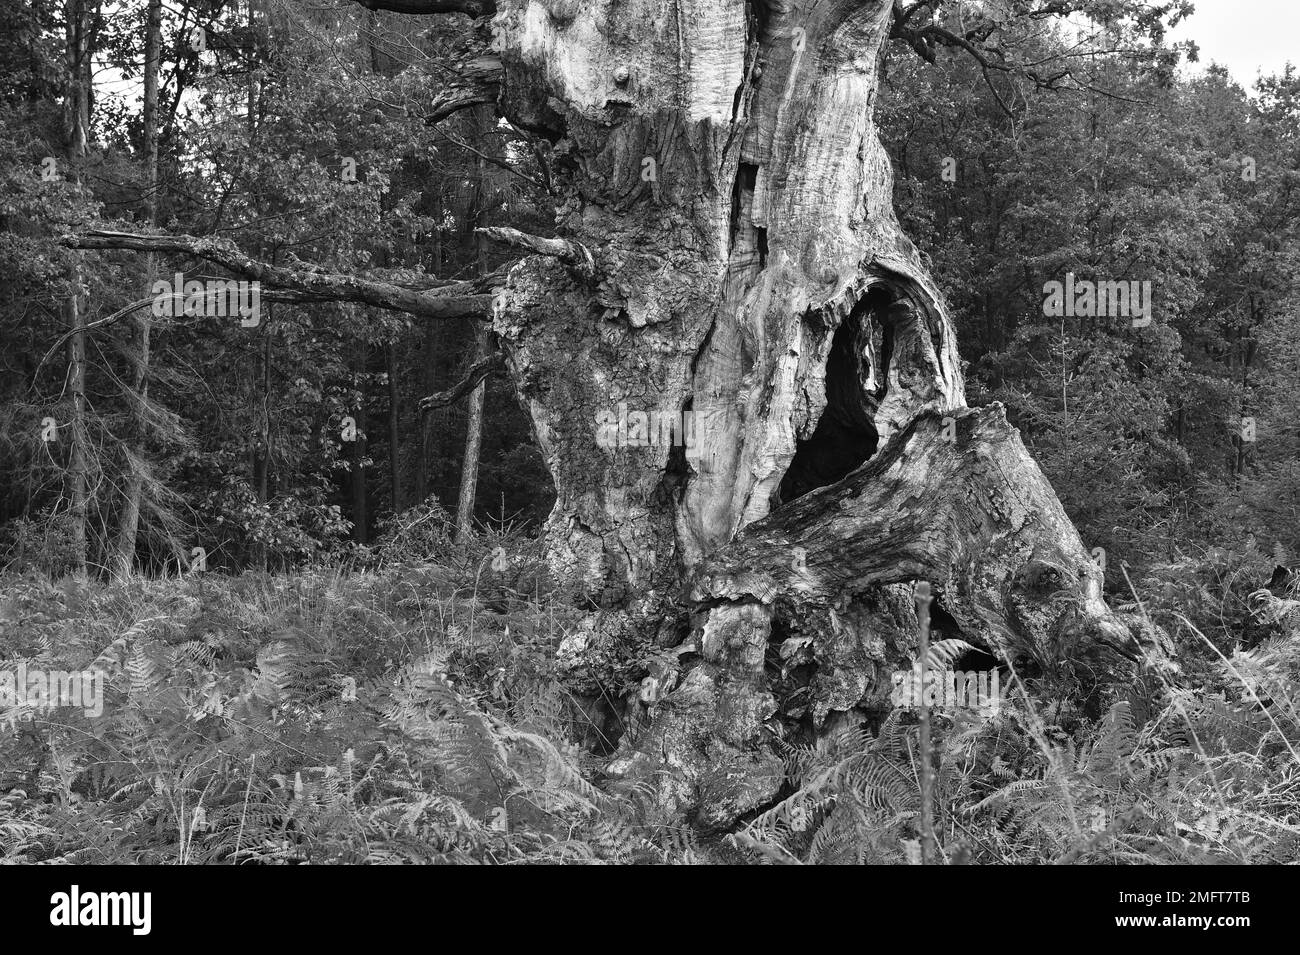 Quercia di corte (Quercus), quercia vecchia in bracken (Pteridium aquilinum), nella foresta primitiva Sababurg, Assia del Nord, Germania Foto Stock